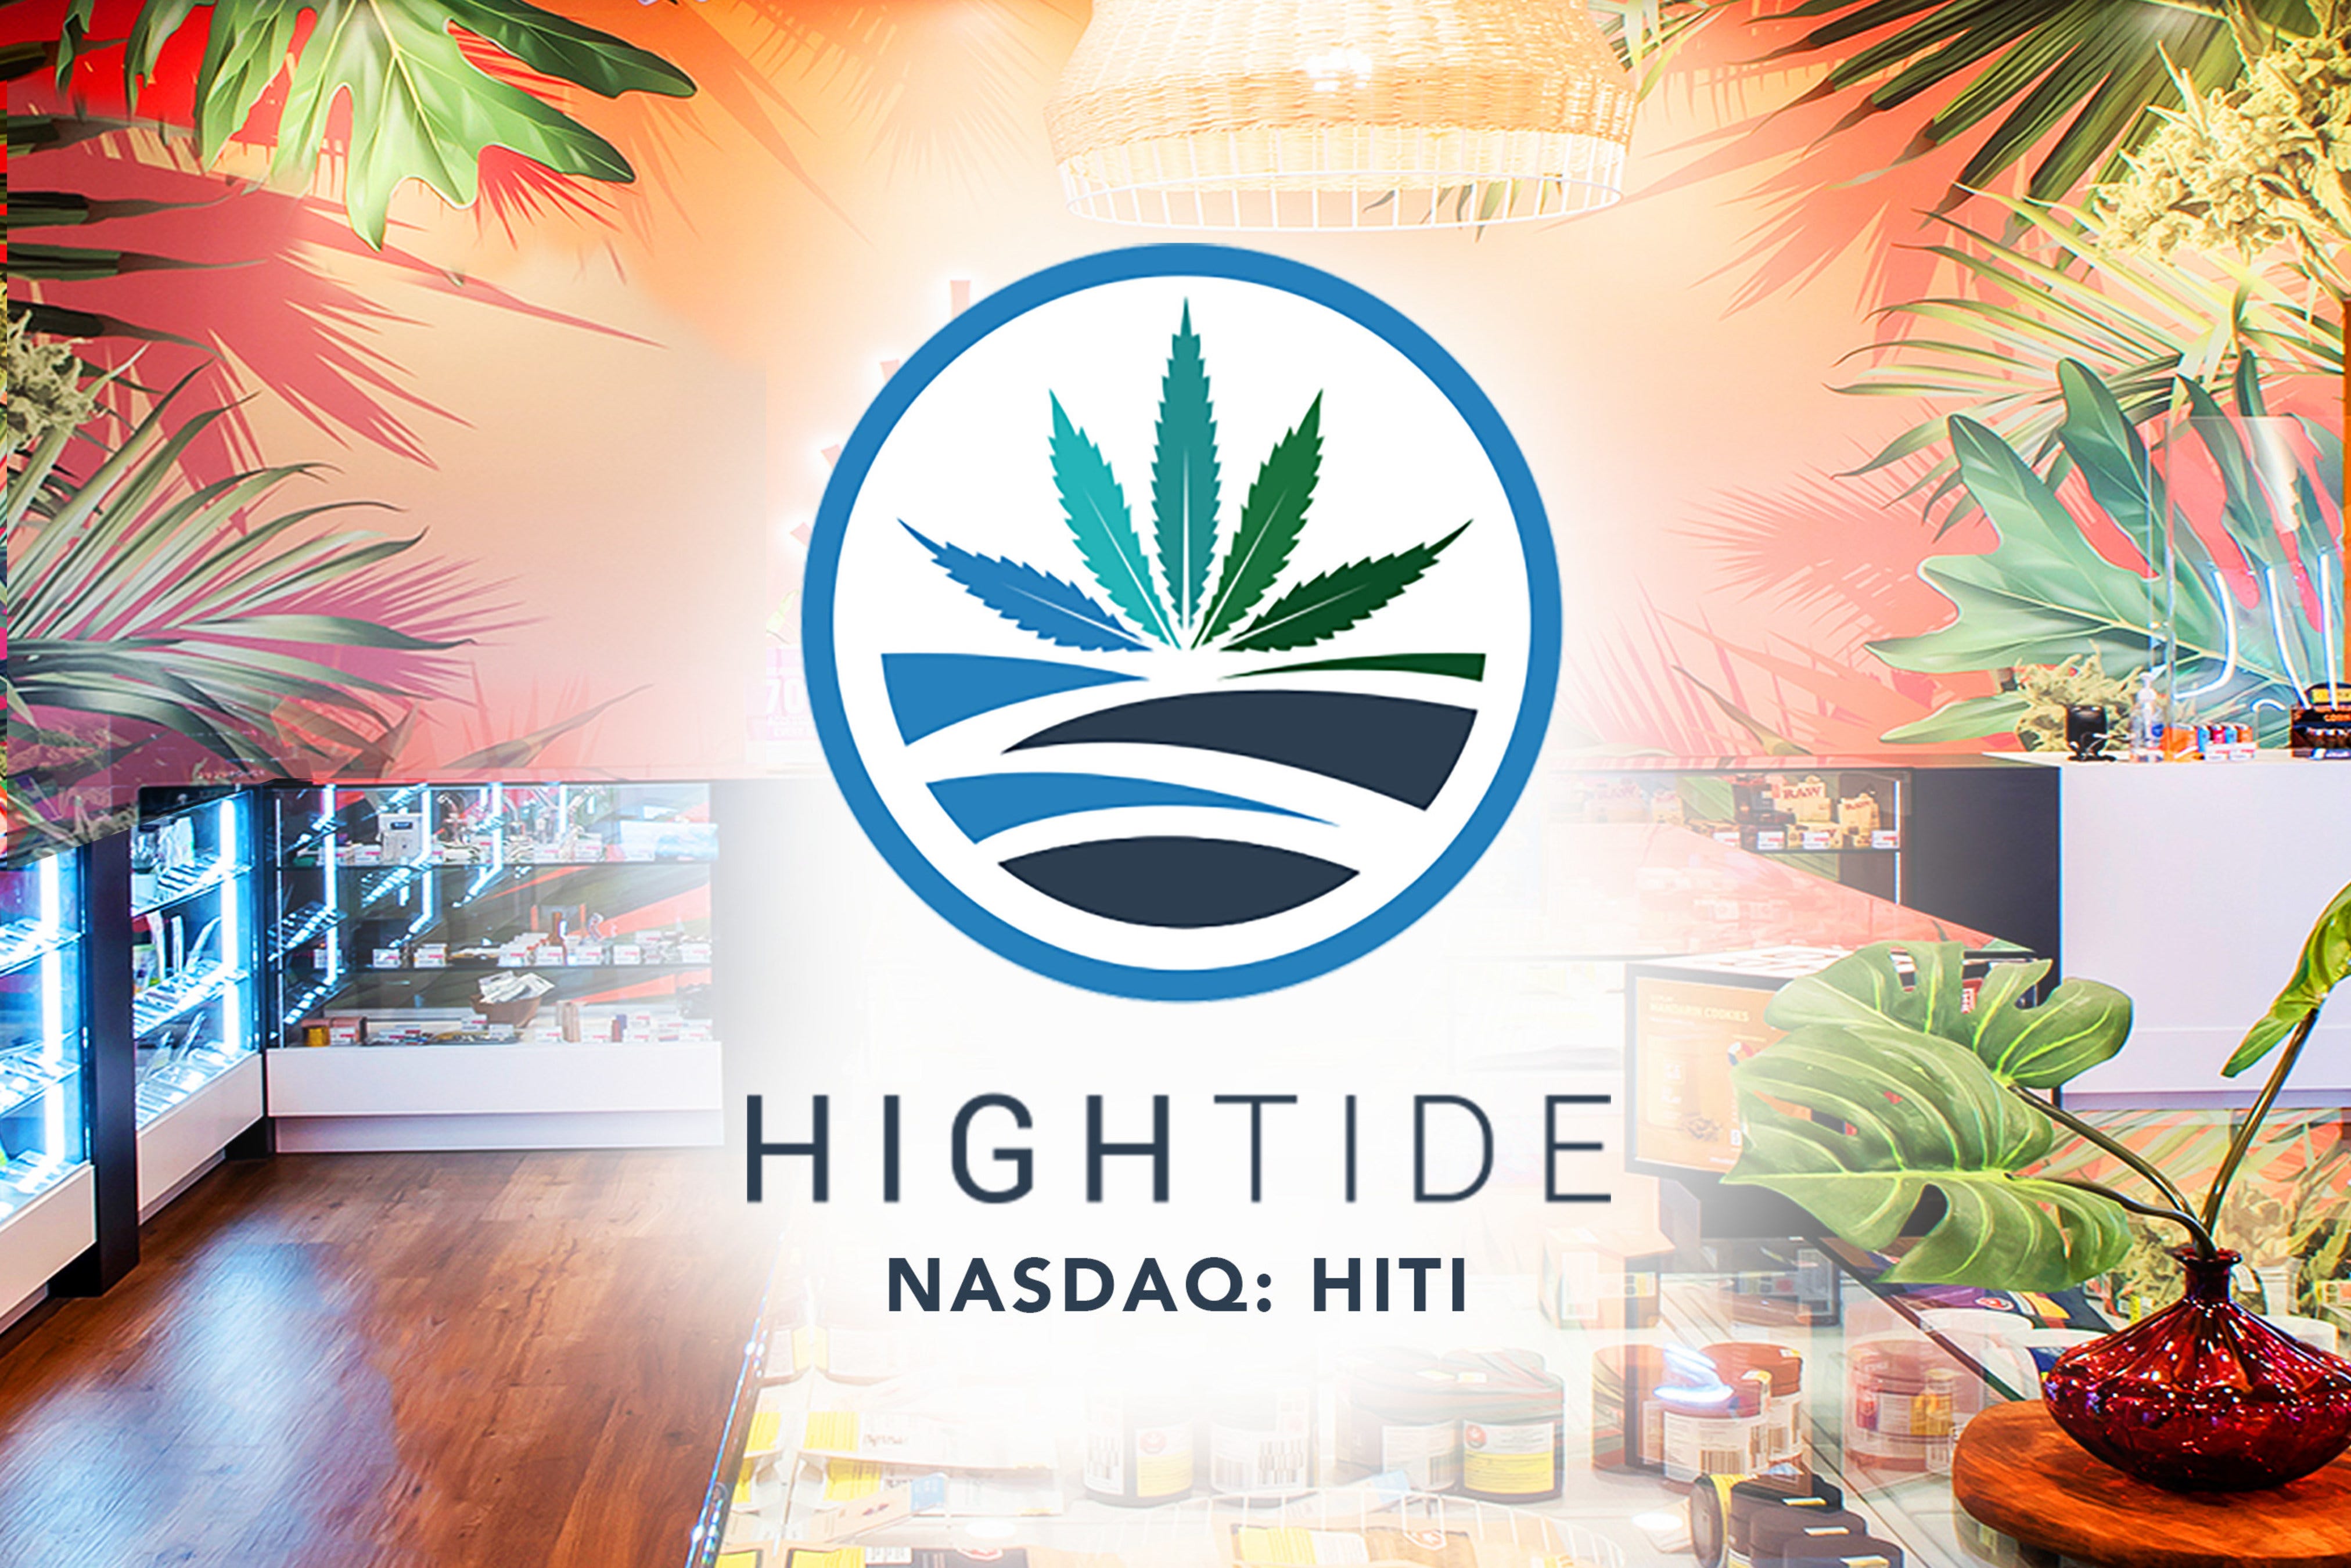 High Tide Opens 107th Marijuana Store In Canada With New Canna Cabana Location In Regina